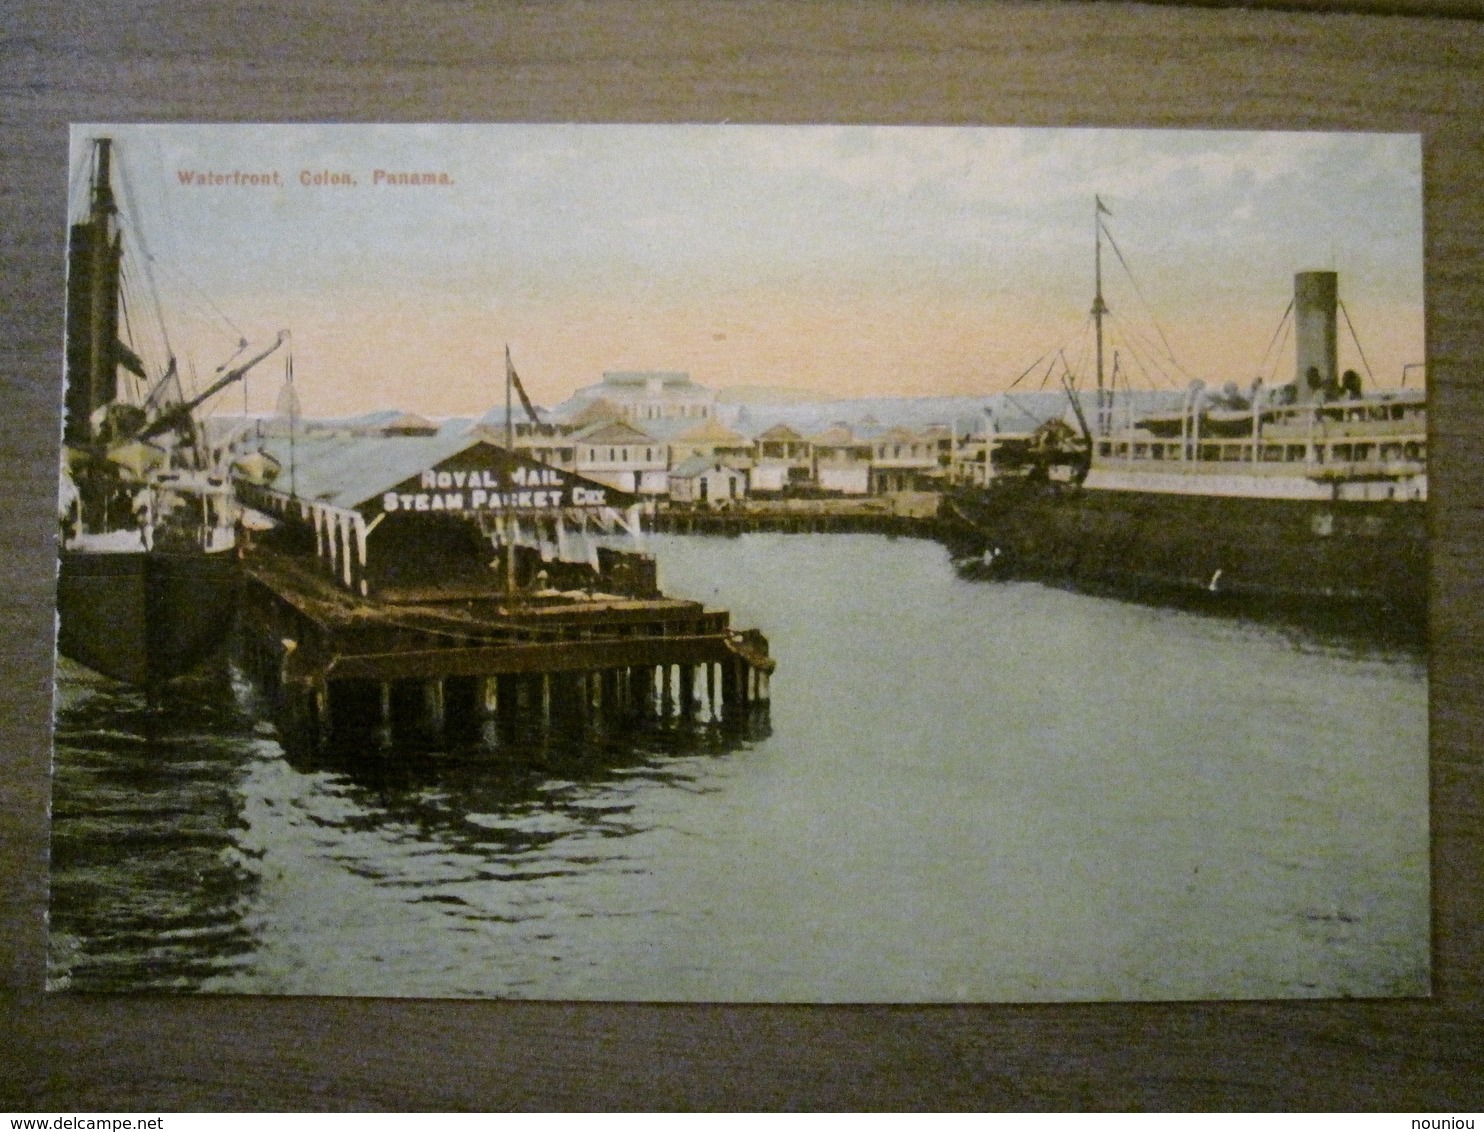 Tarjeta Postal Postcard - Panama - Waterfront - Colon - Royal Mail Steam Packet - Americhrome Leipzig - Panama